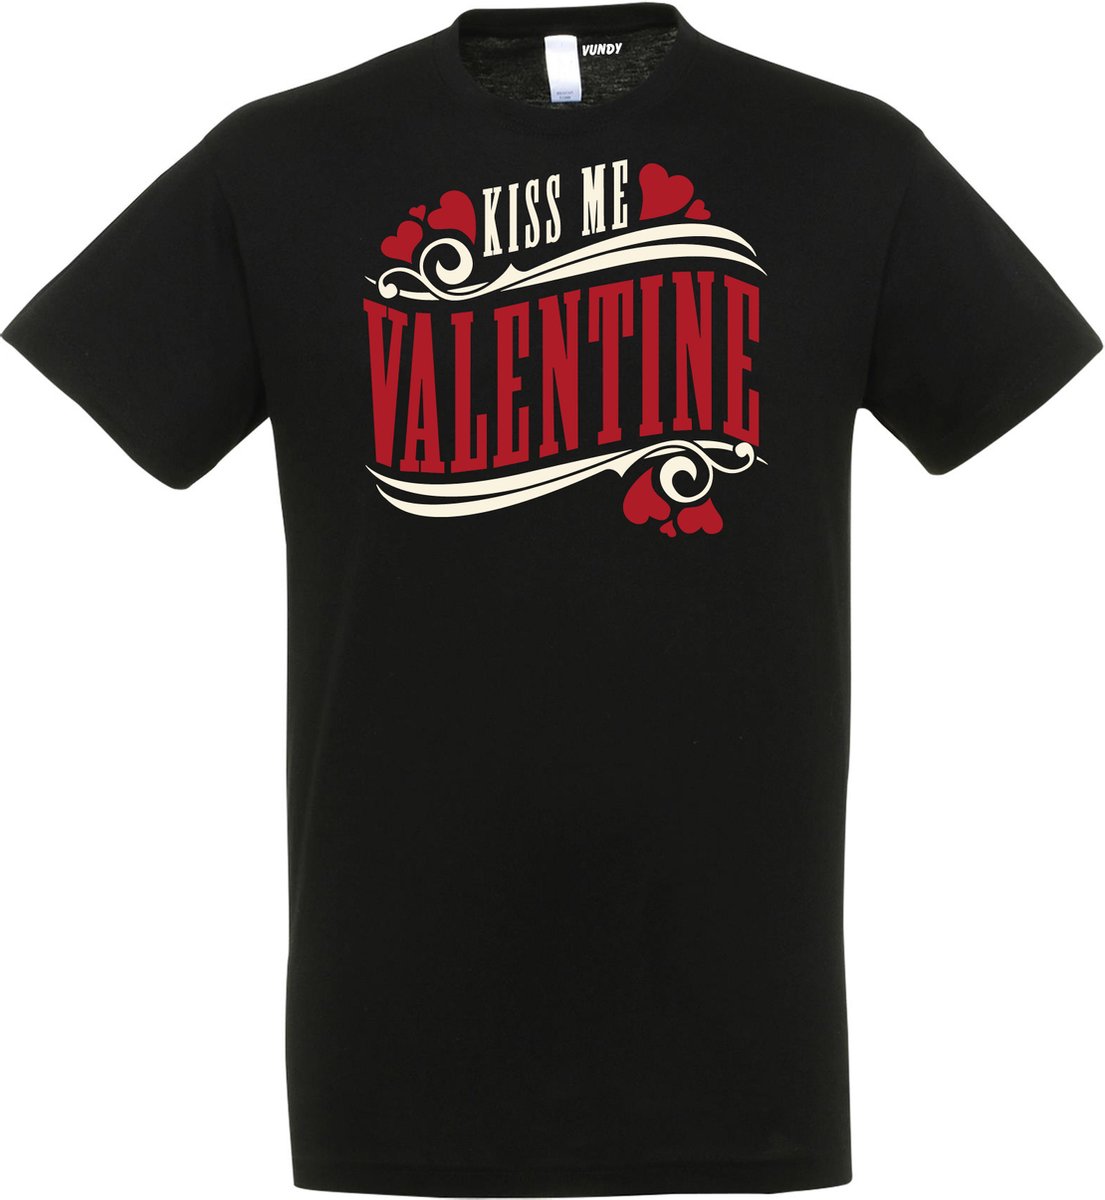 T-shirt Kiss Me Valentine | valentijn cadeautje voor hem haar | valentijn | valentijnsdag cadeau | Zwart | maat L